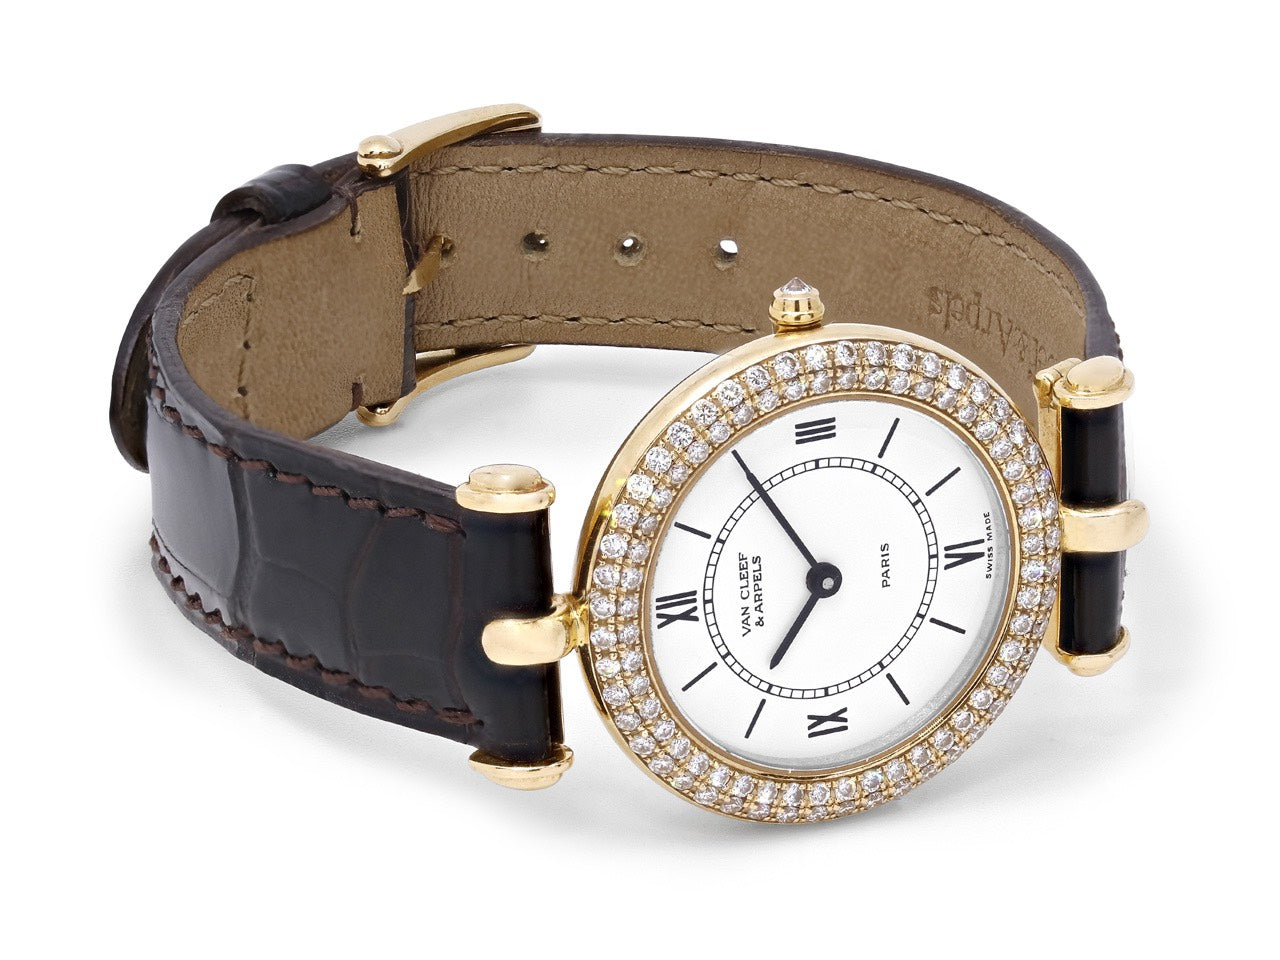 Van Cleef & Arpels 'Classique Fantasy' Diamond Lady's Watch in 18K Gold